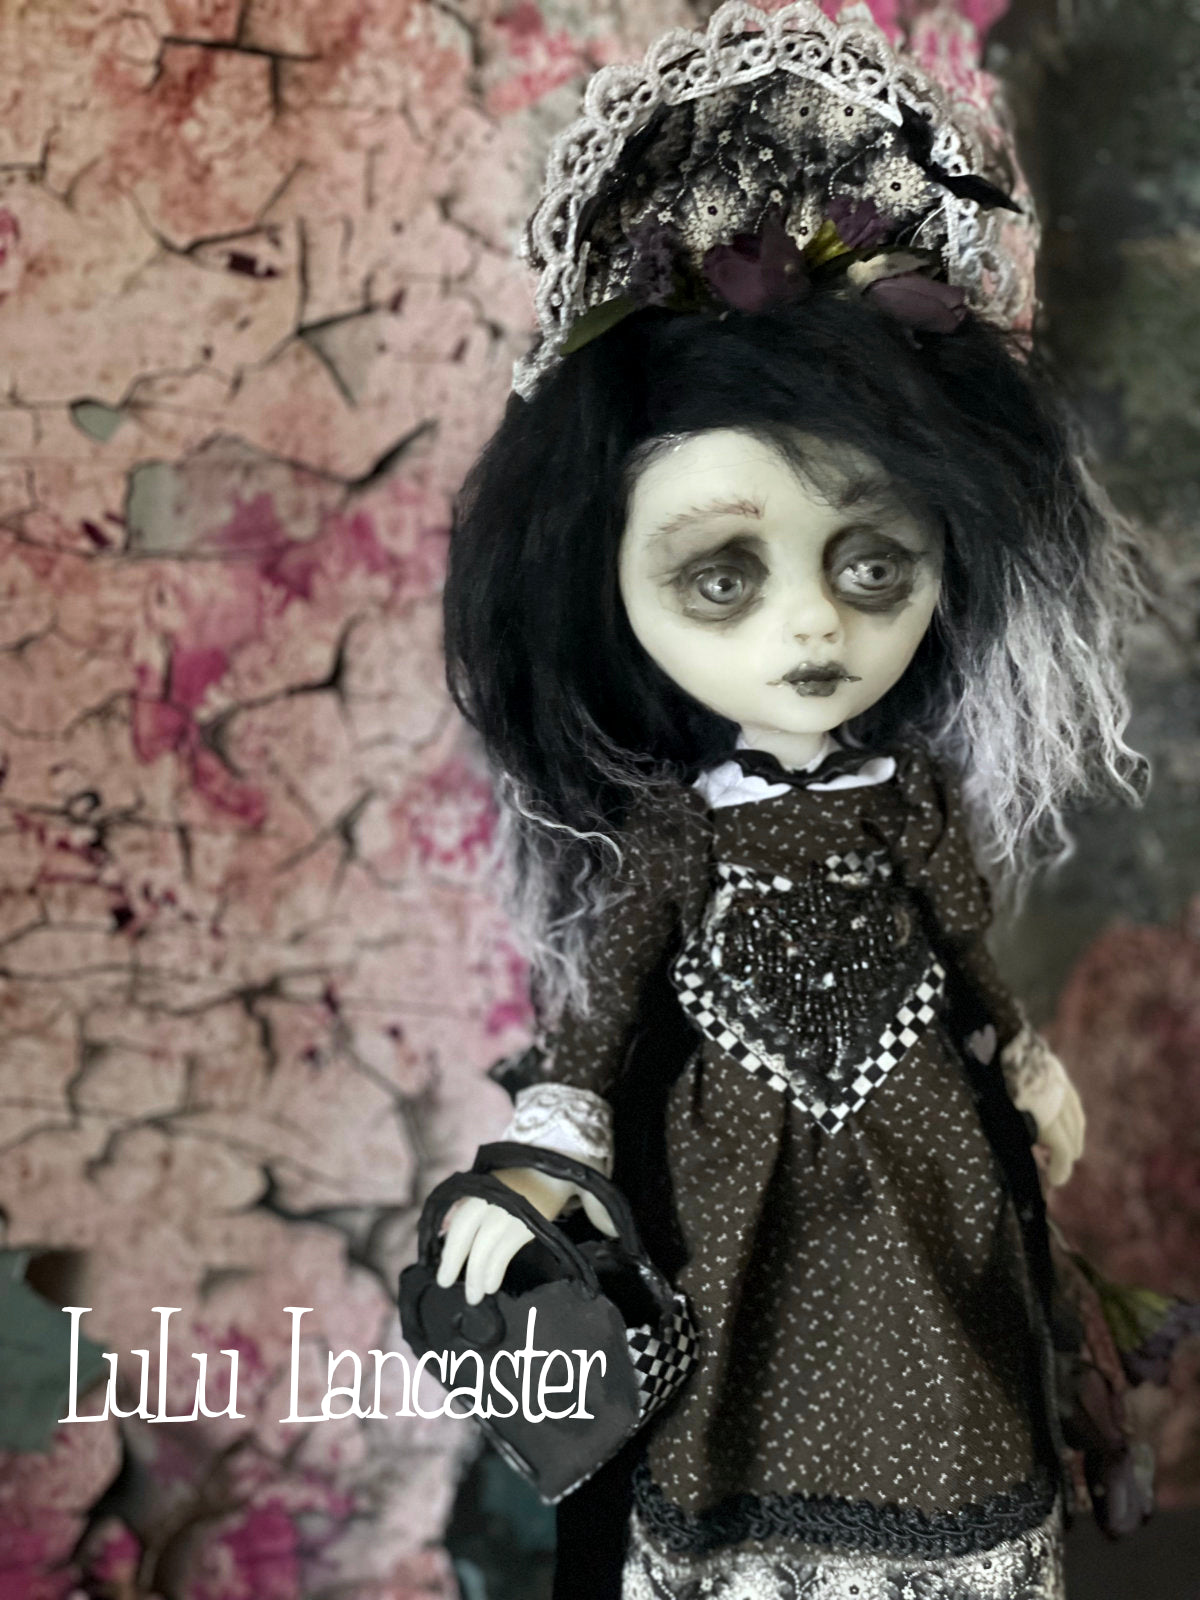 Sandrine Dark Heart Goth Valentine Original LuLu Lancaster Art Doll